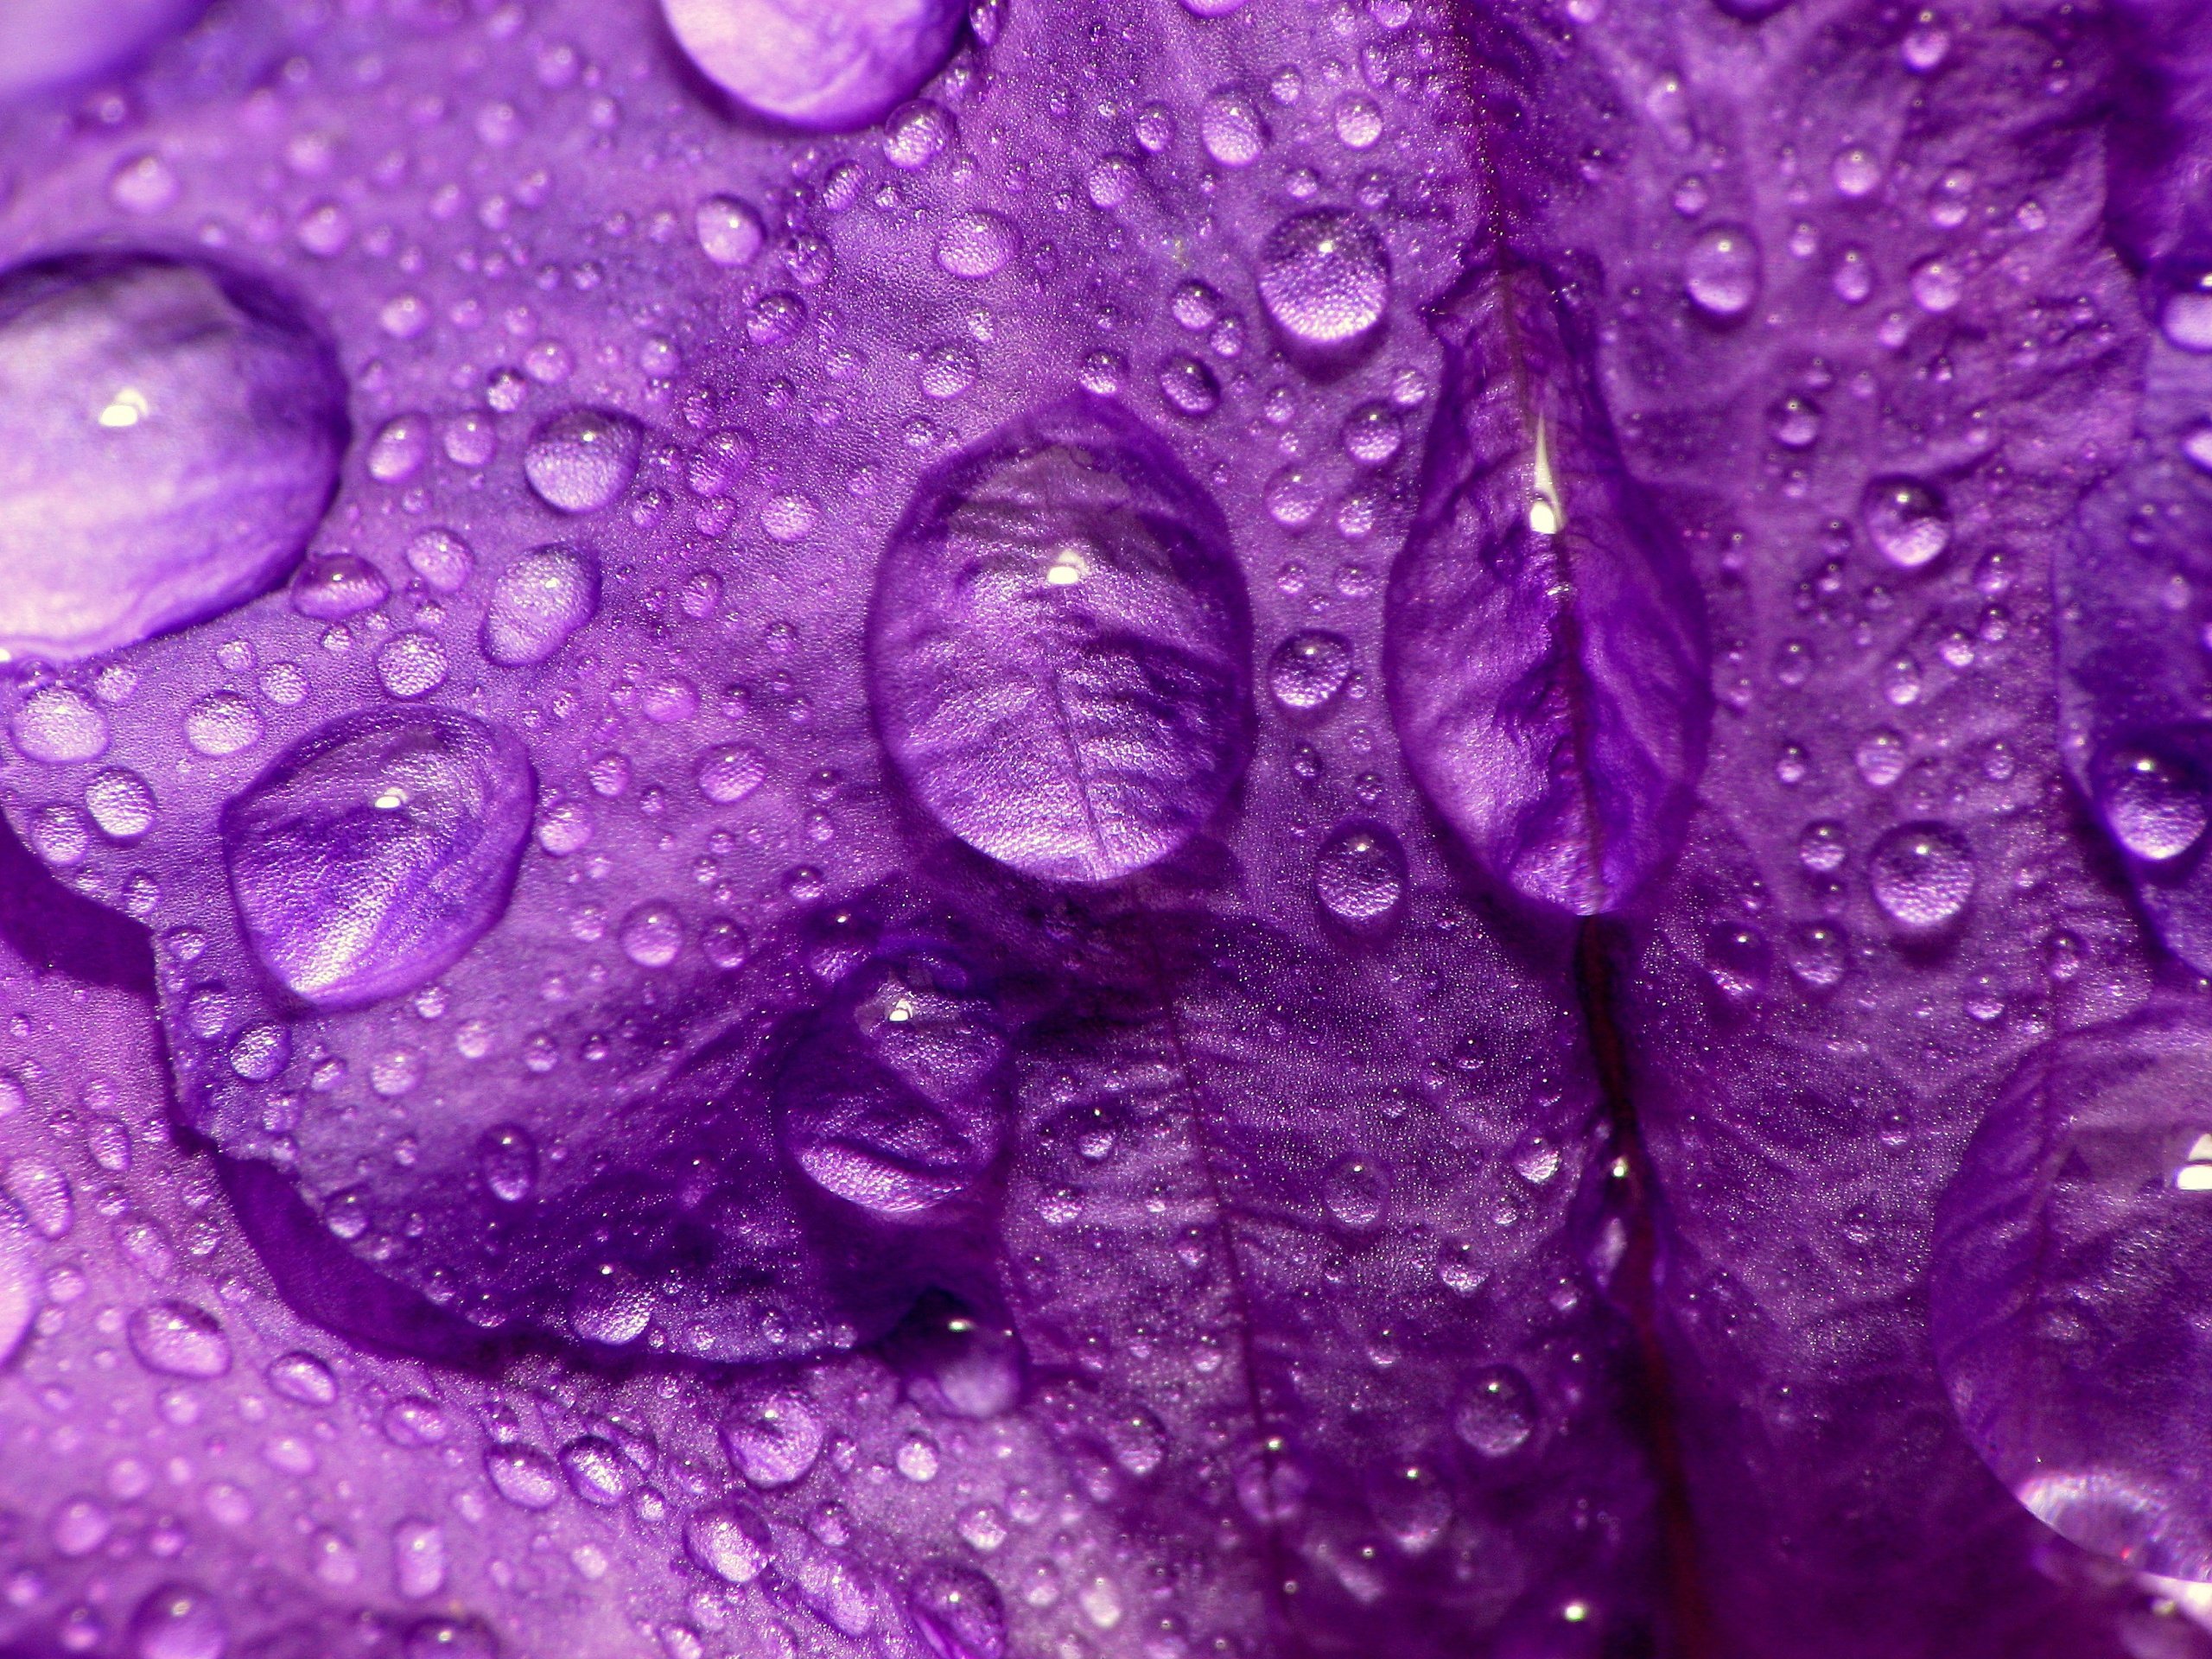  up nature flowers purple water drops macro flower petals wallpaper